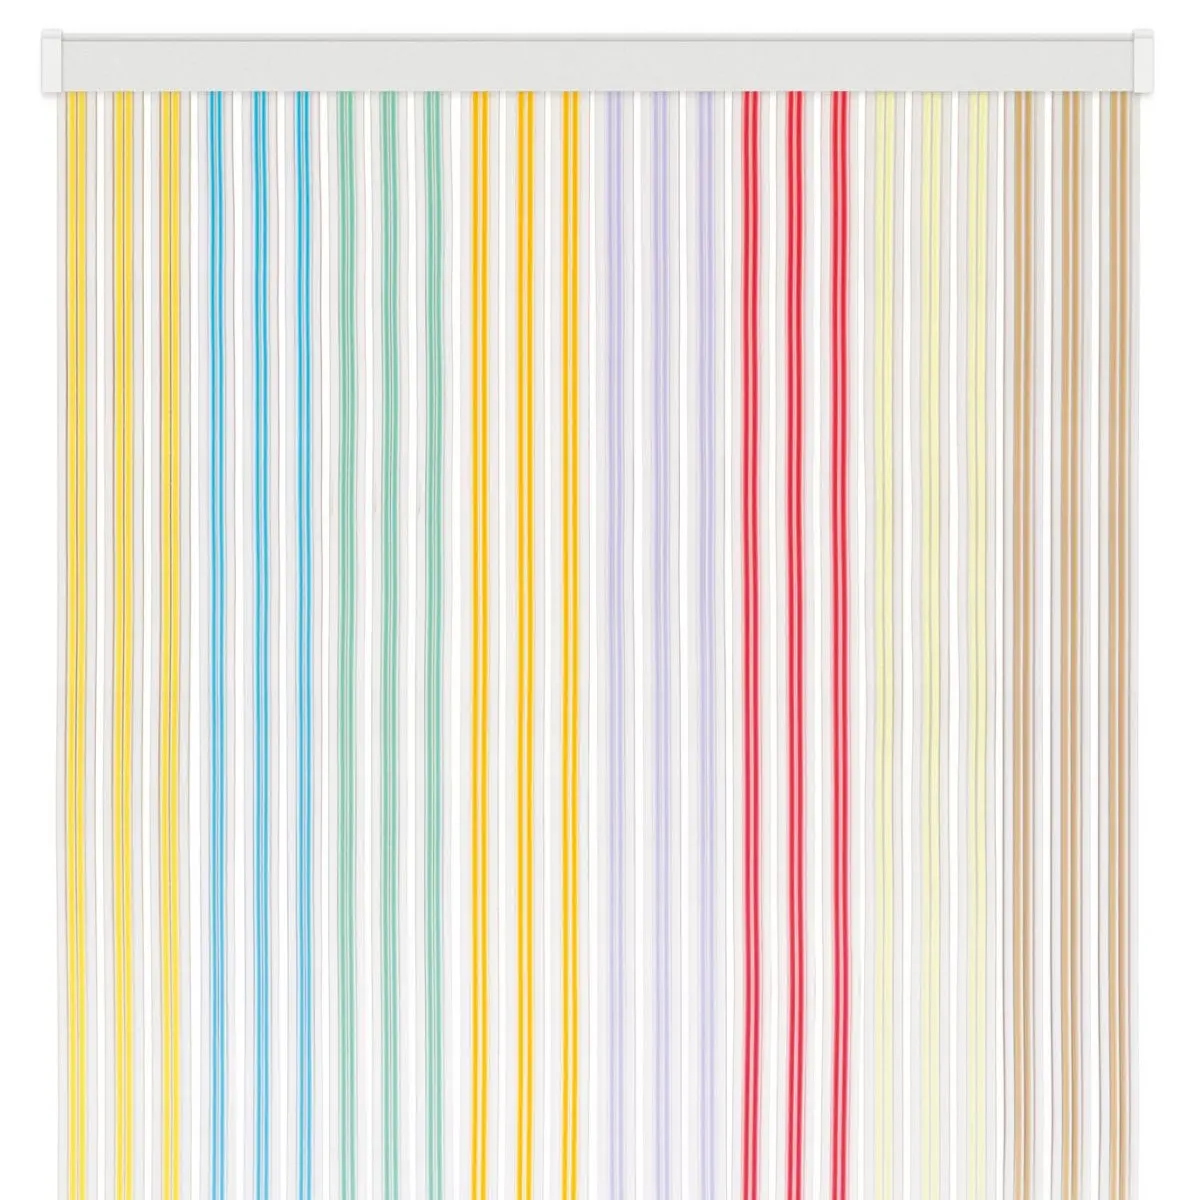 Perdeaua usii Band Lux - 100 x 220 cm, colorata